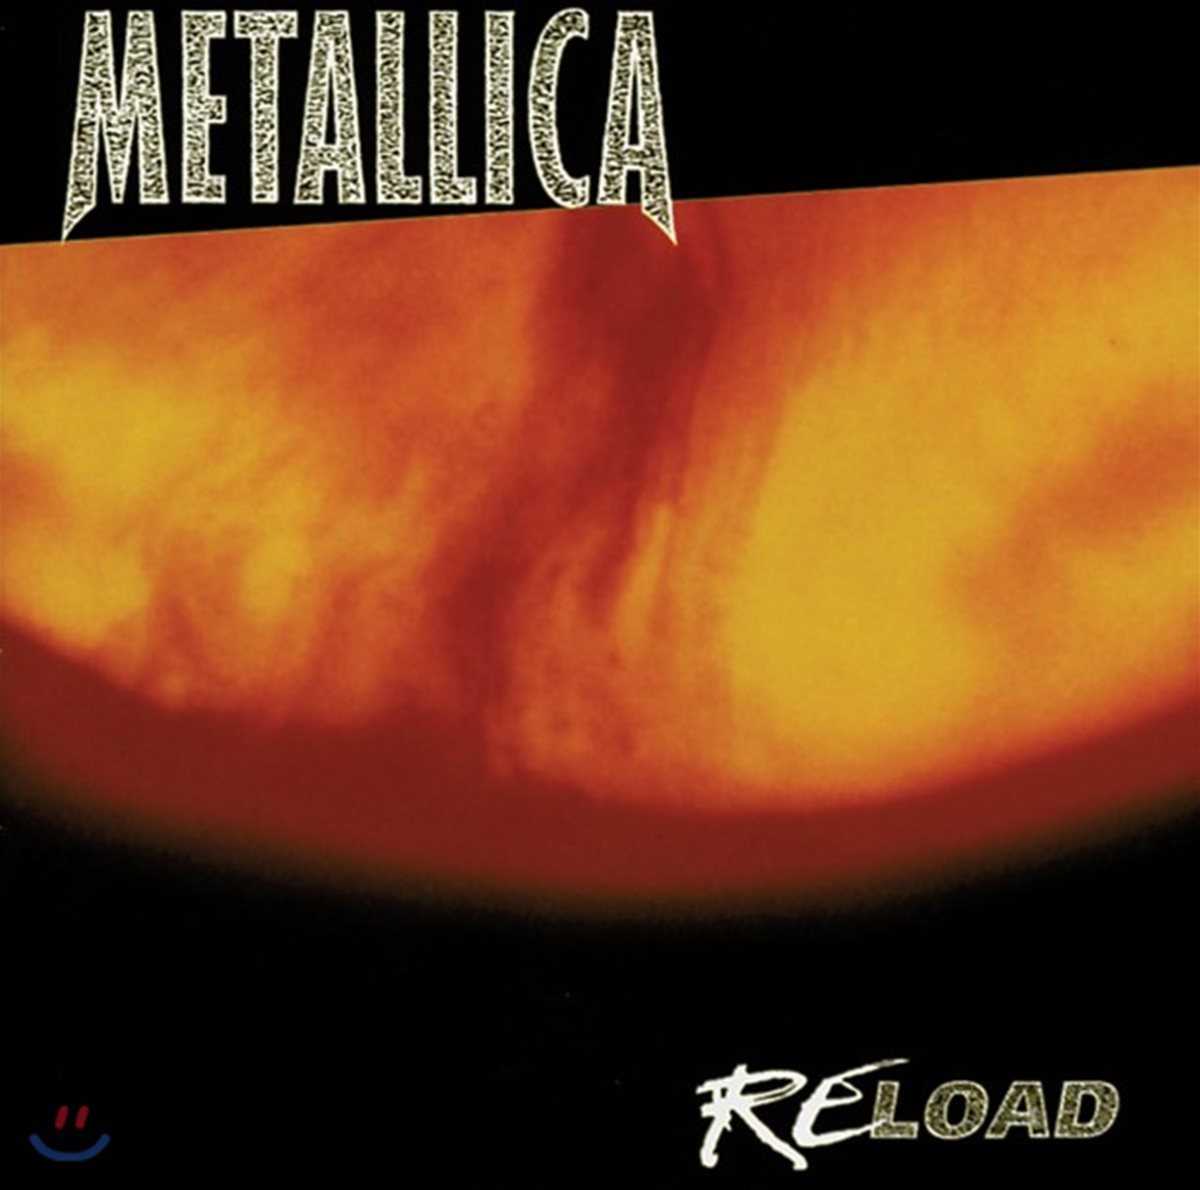 Metallica - Reload [2LP]